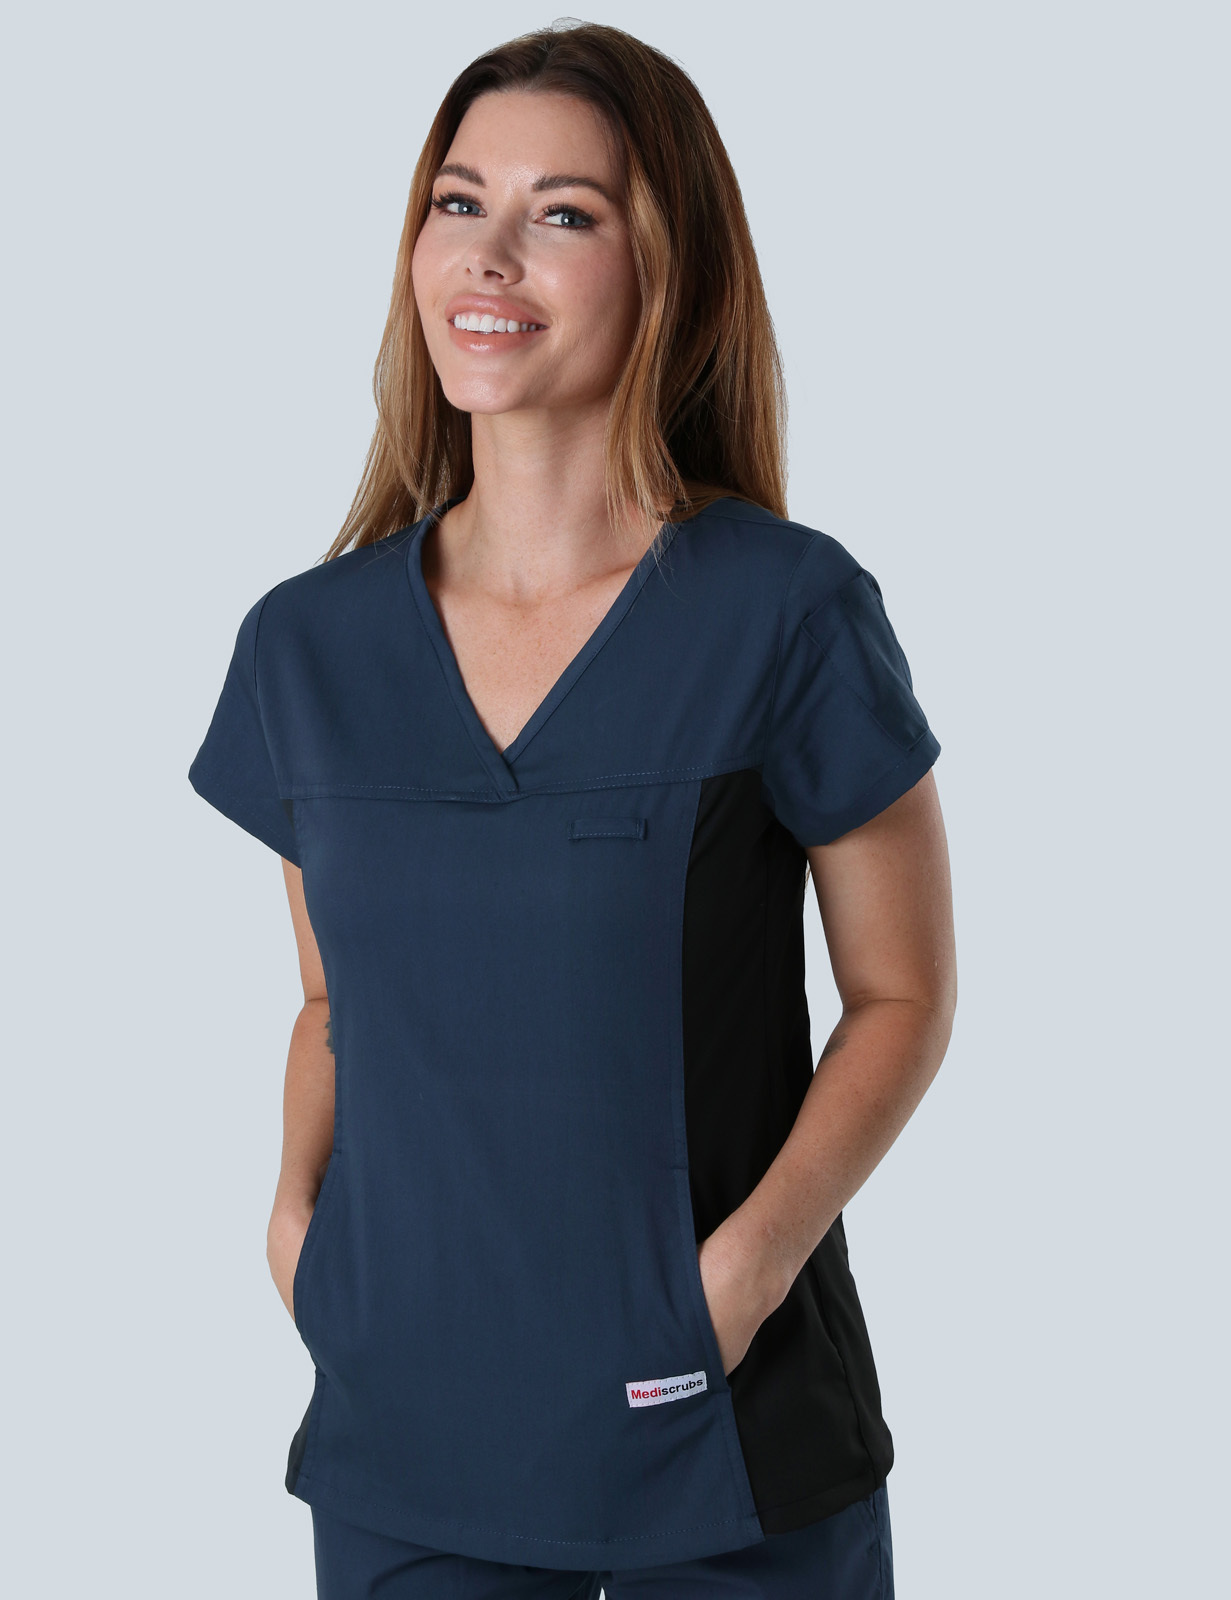 Richmond Health Services - Nursing (Women's Fit Spandex Scrub Top in Navy incl Logos)